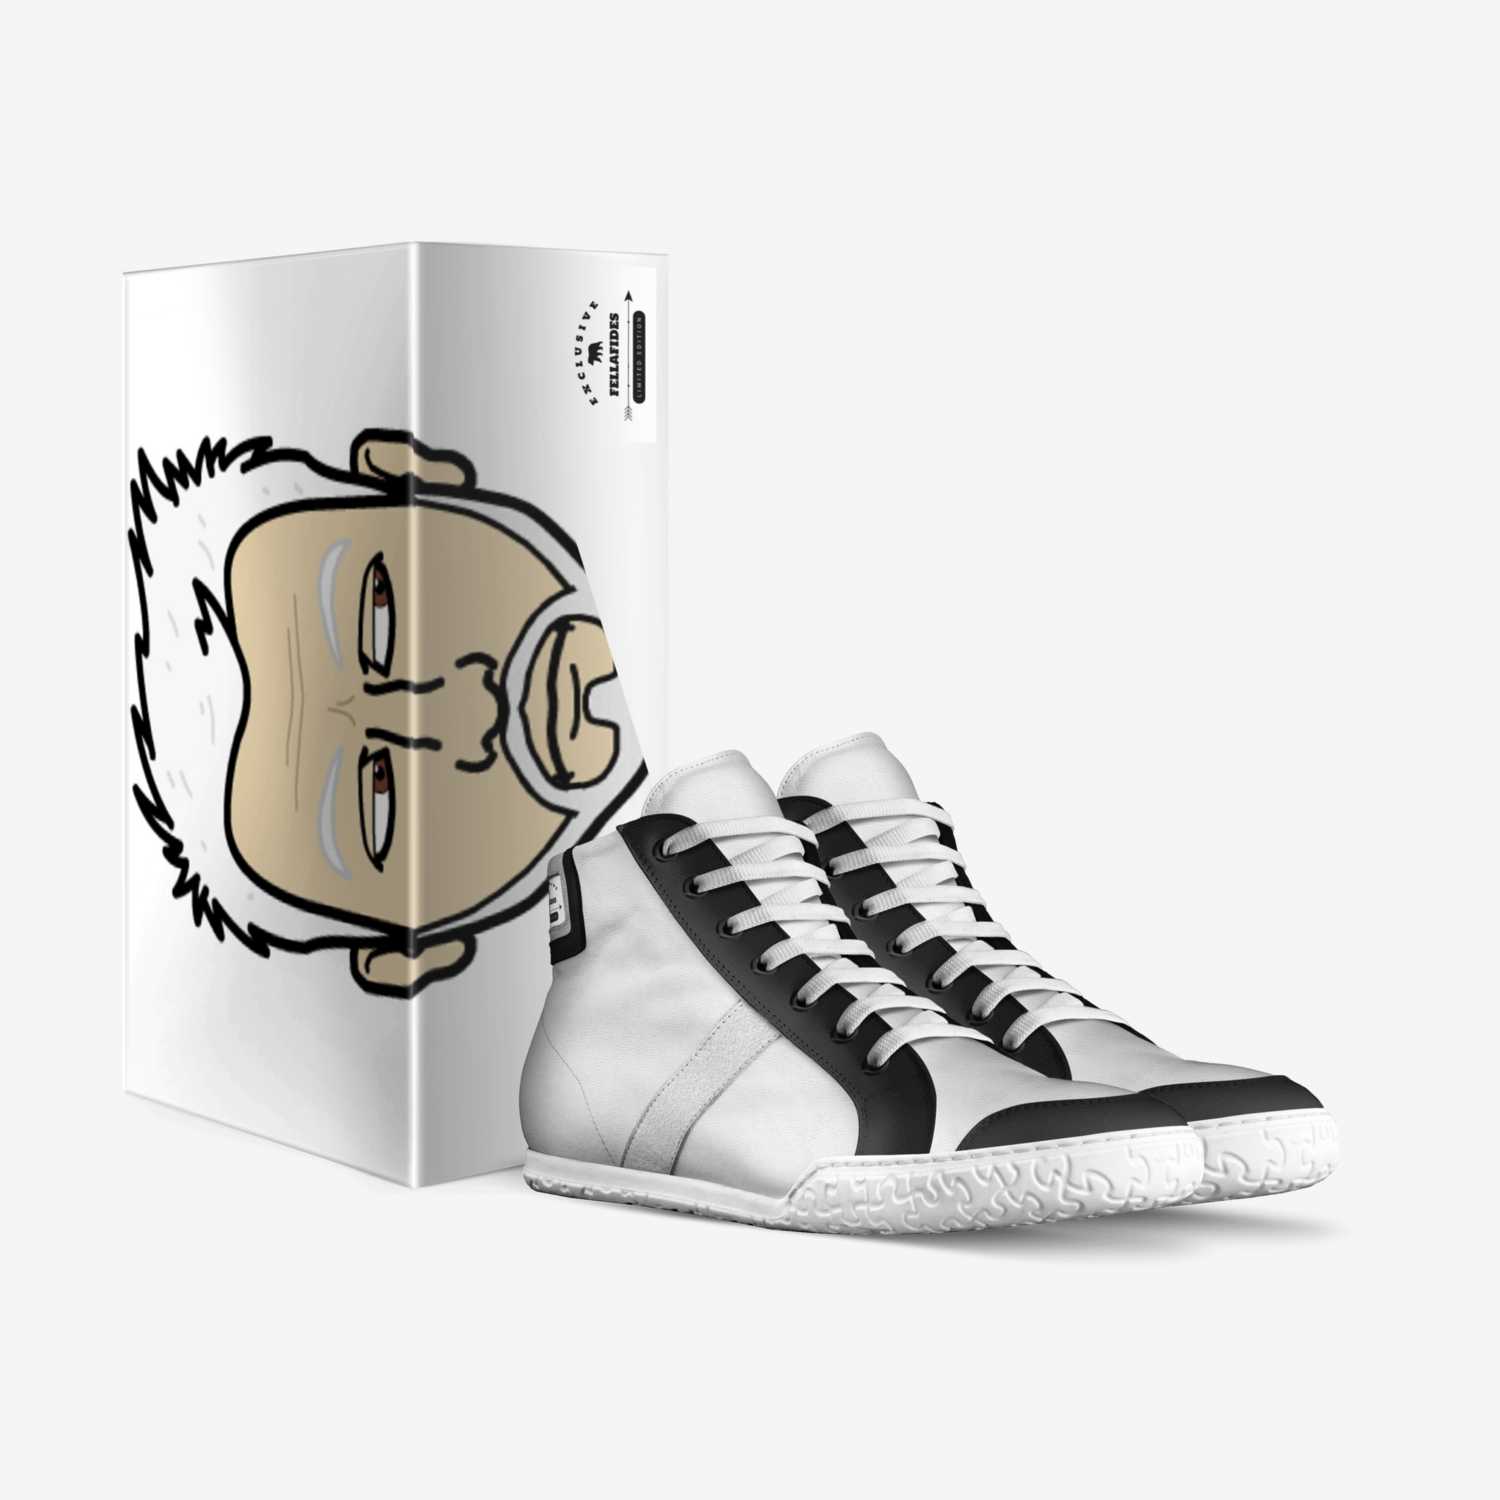 Fellafides custom made in Italy shoes by Fella Fide | Box view